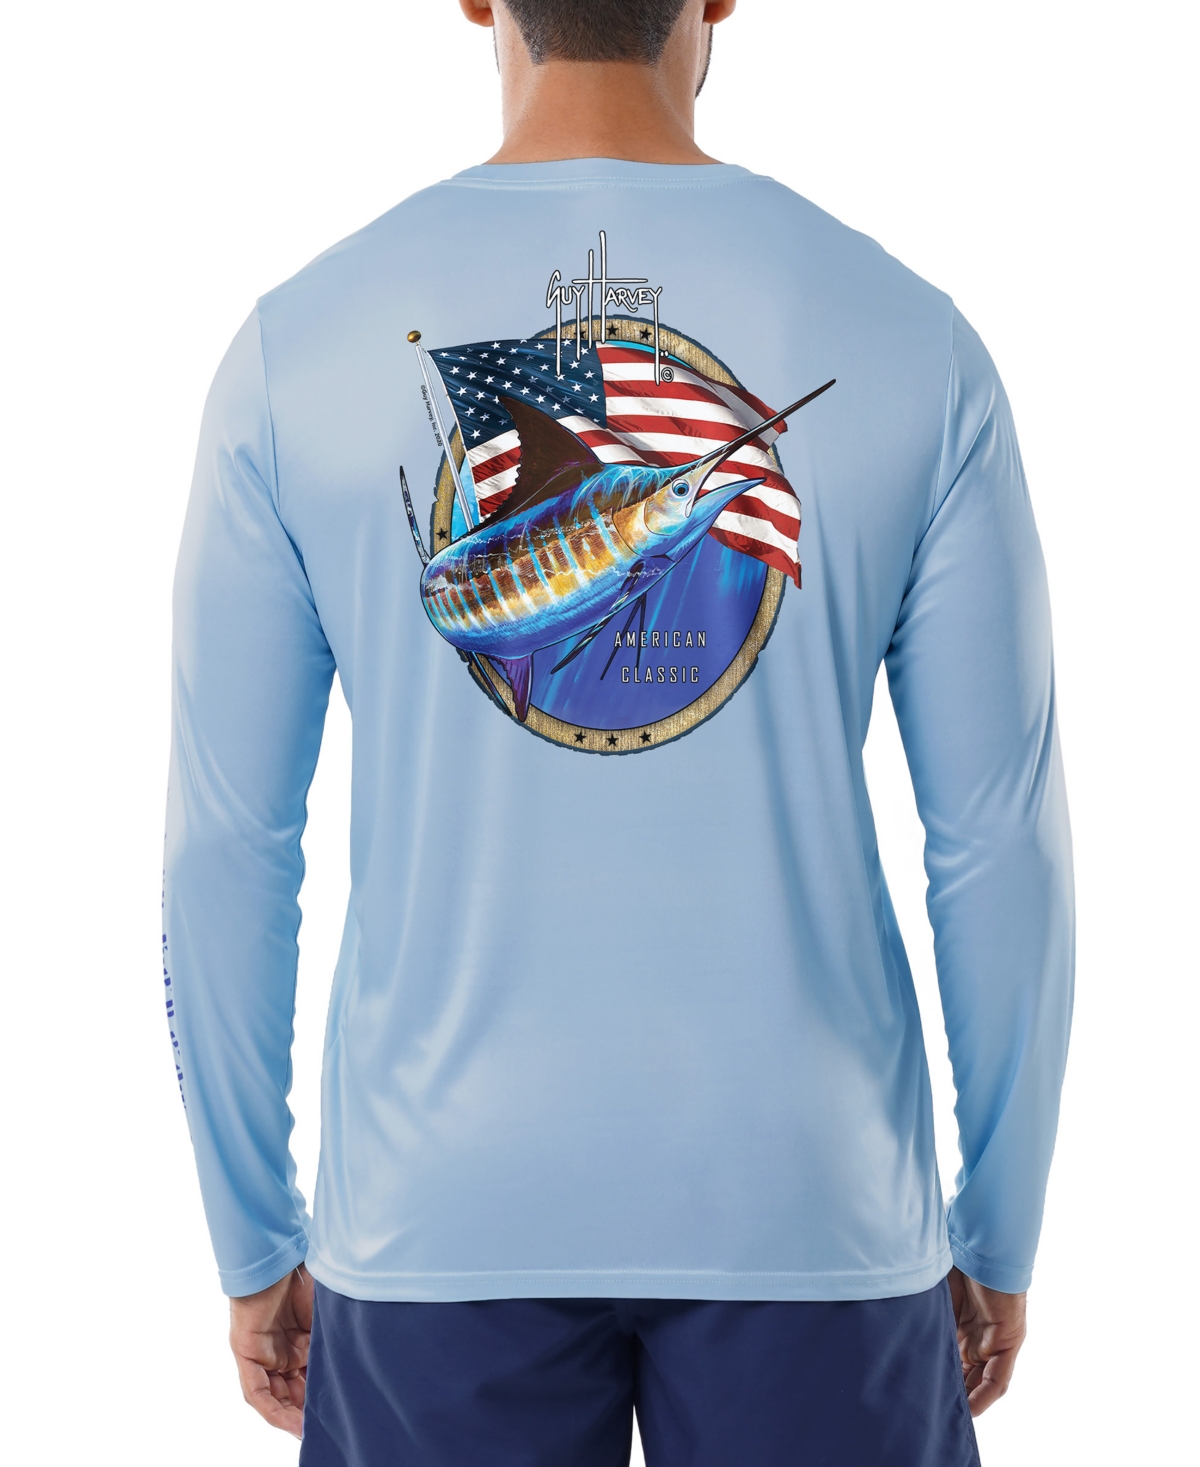 Men's American Classic Logo Graphic Long-Sleeve Sun Protection T-Shirt - Powder Blue